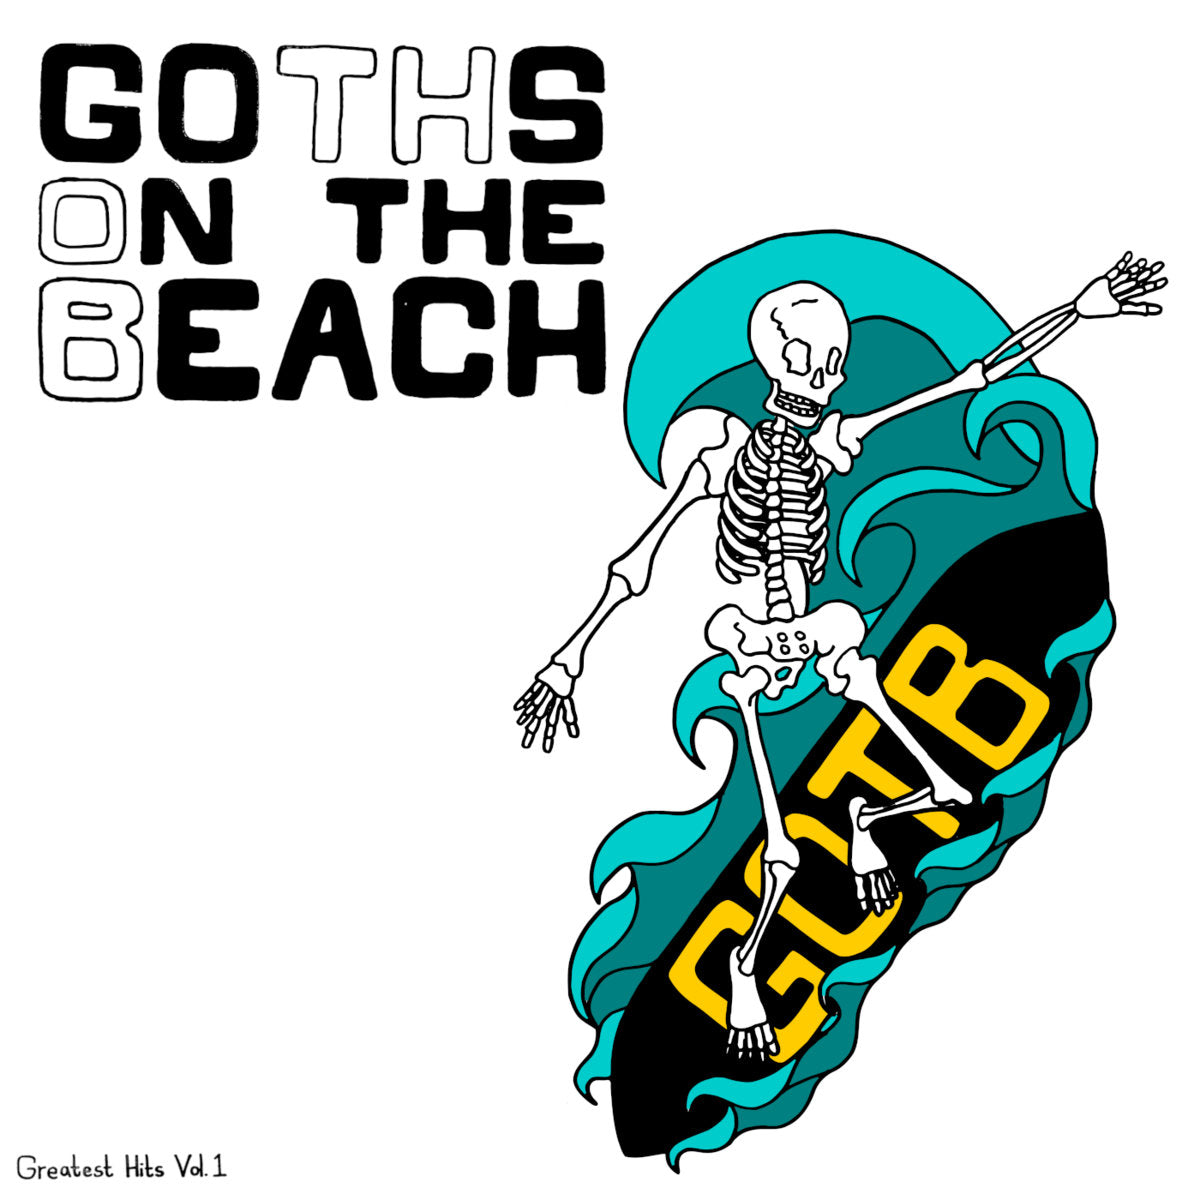 Goths on the Beach - 'Greatest Hits Vol. 1'